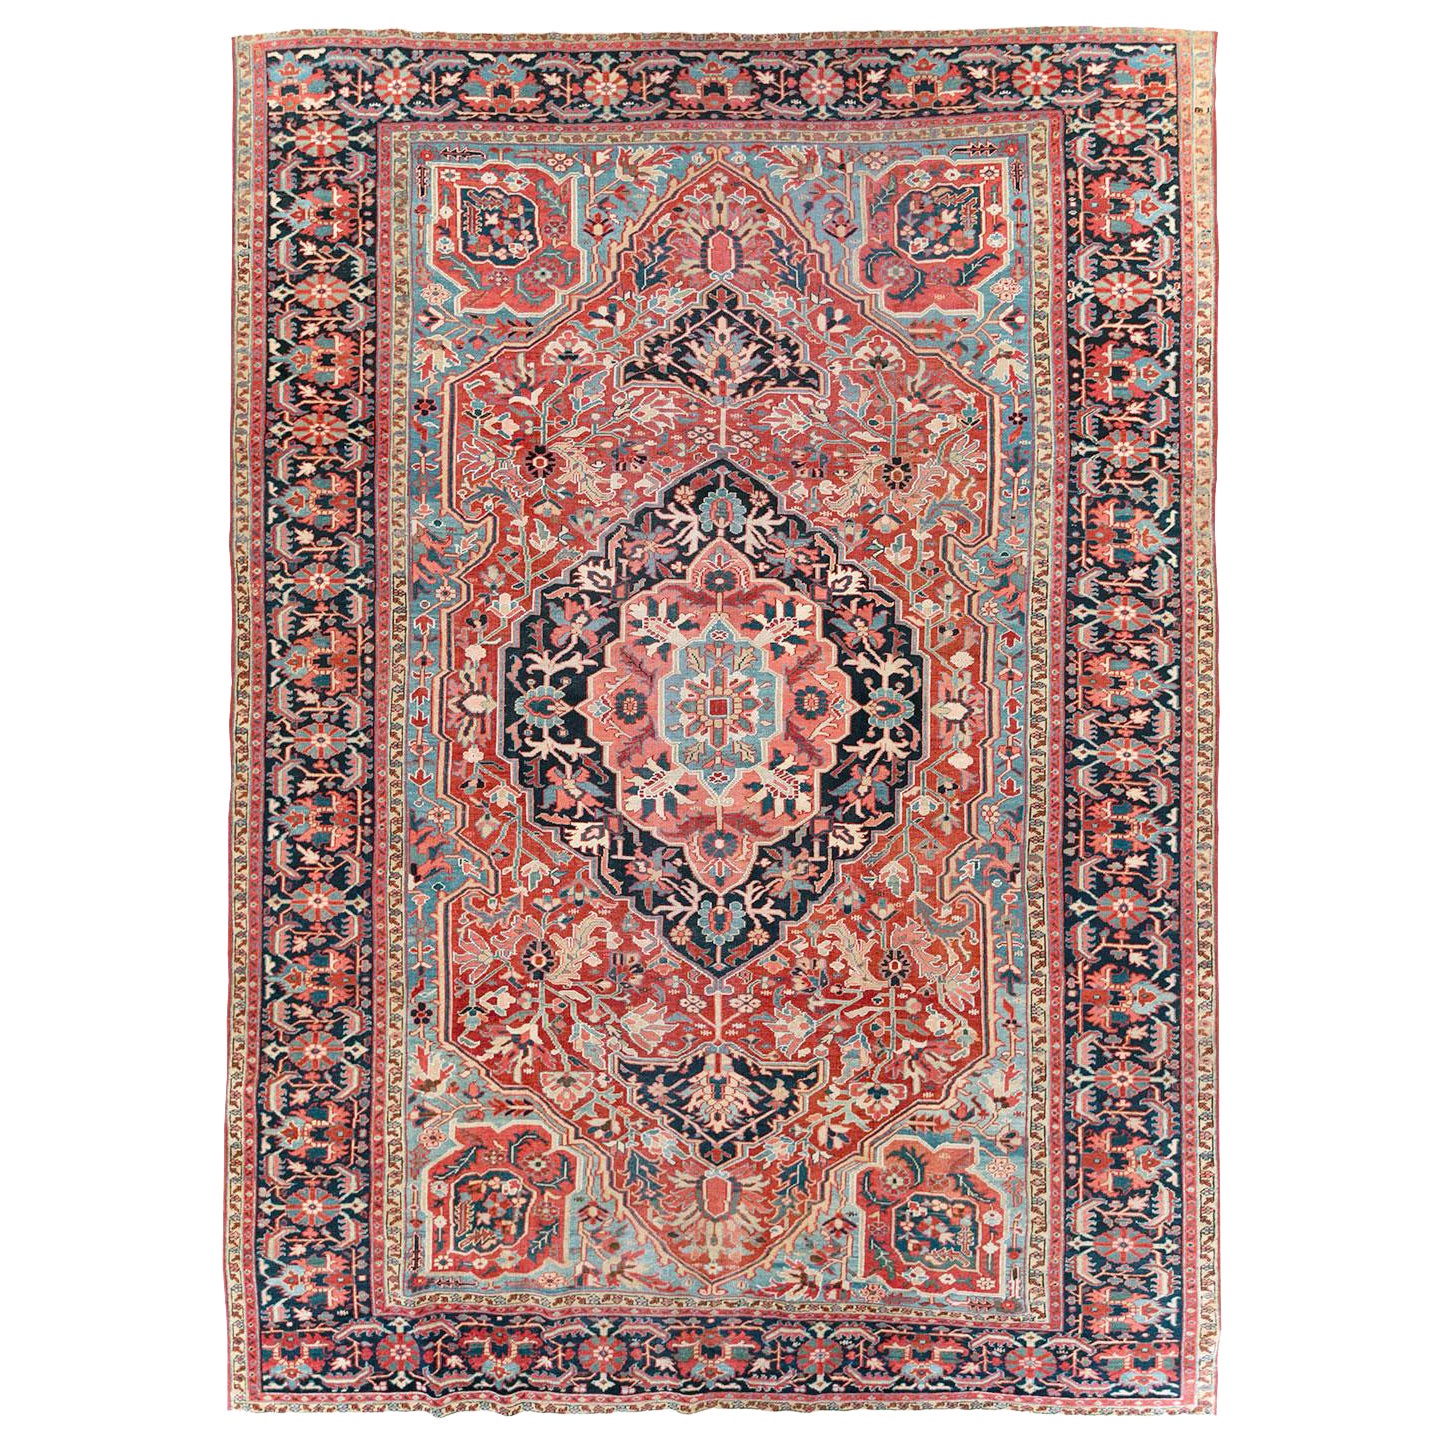 Early 20th Century Handmade Persian Heriz Large Room Size Carpet